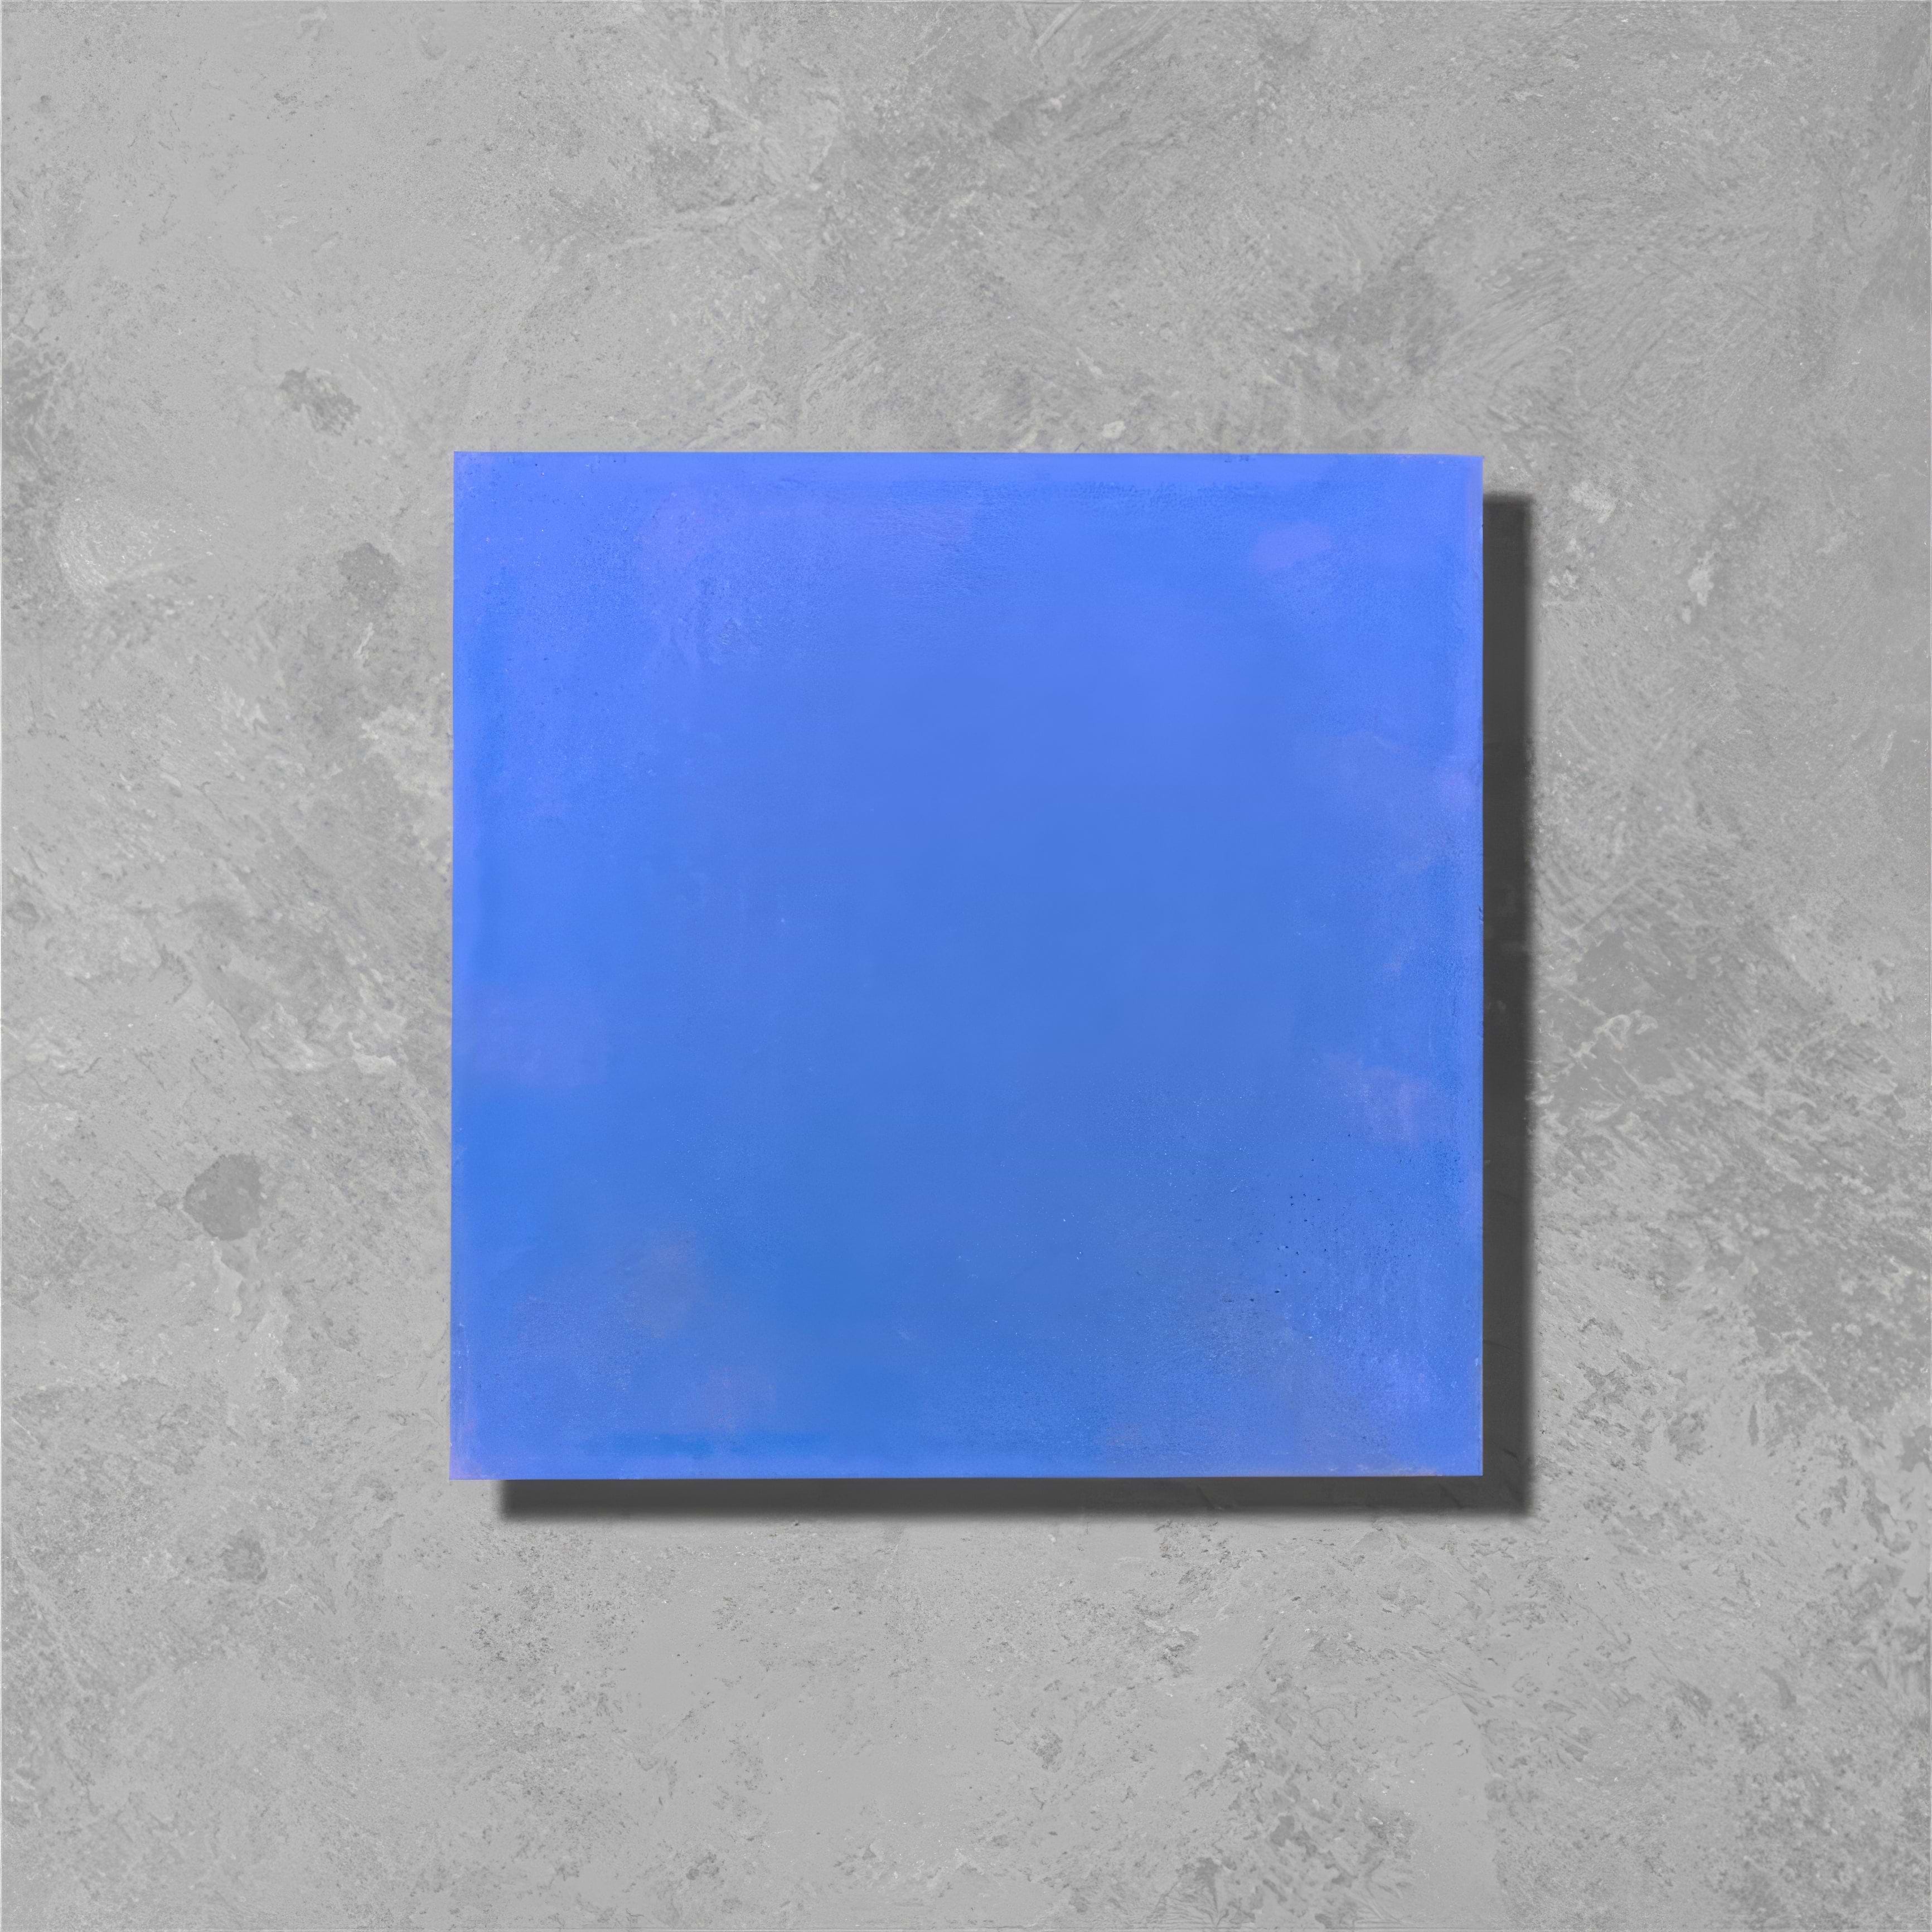 Azure Blue Square Tile - Hyperion Tiles